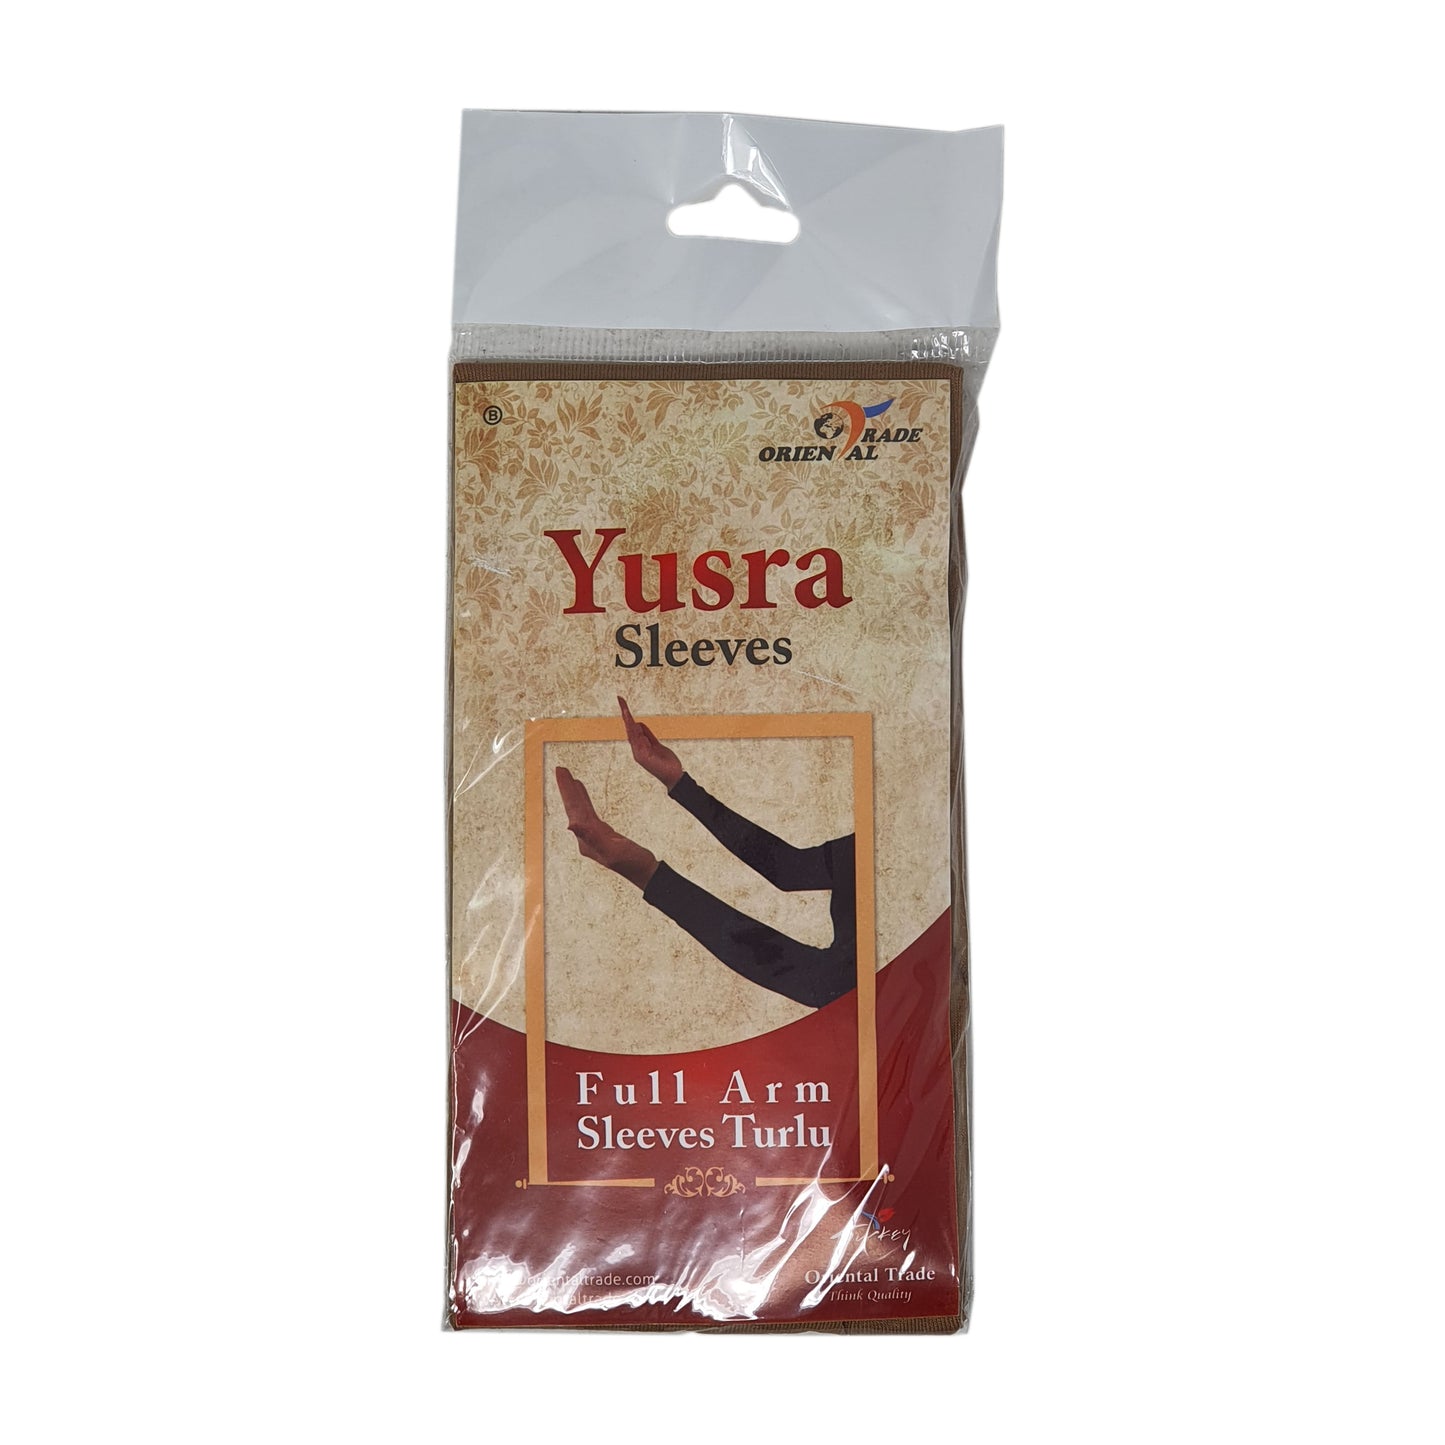 Yusra Sleeves